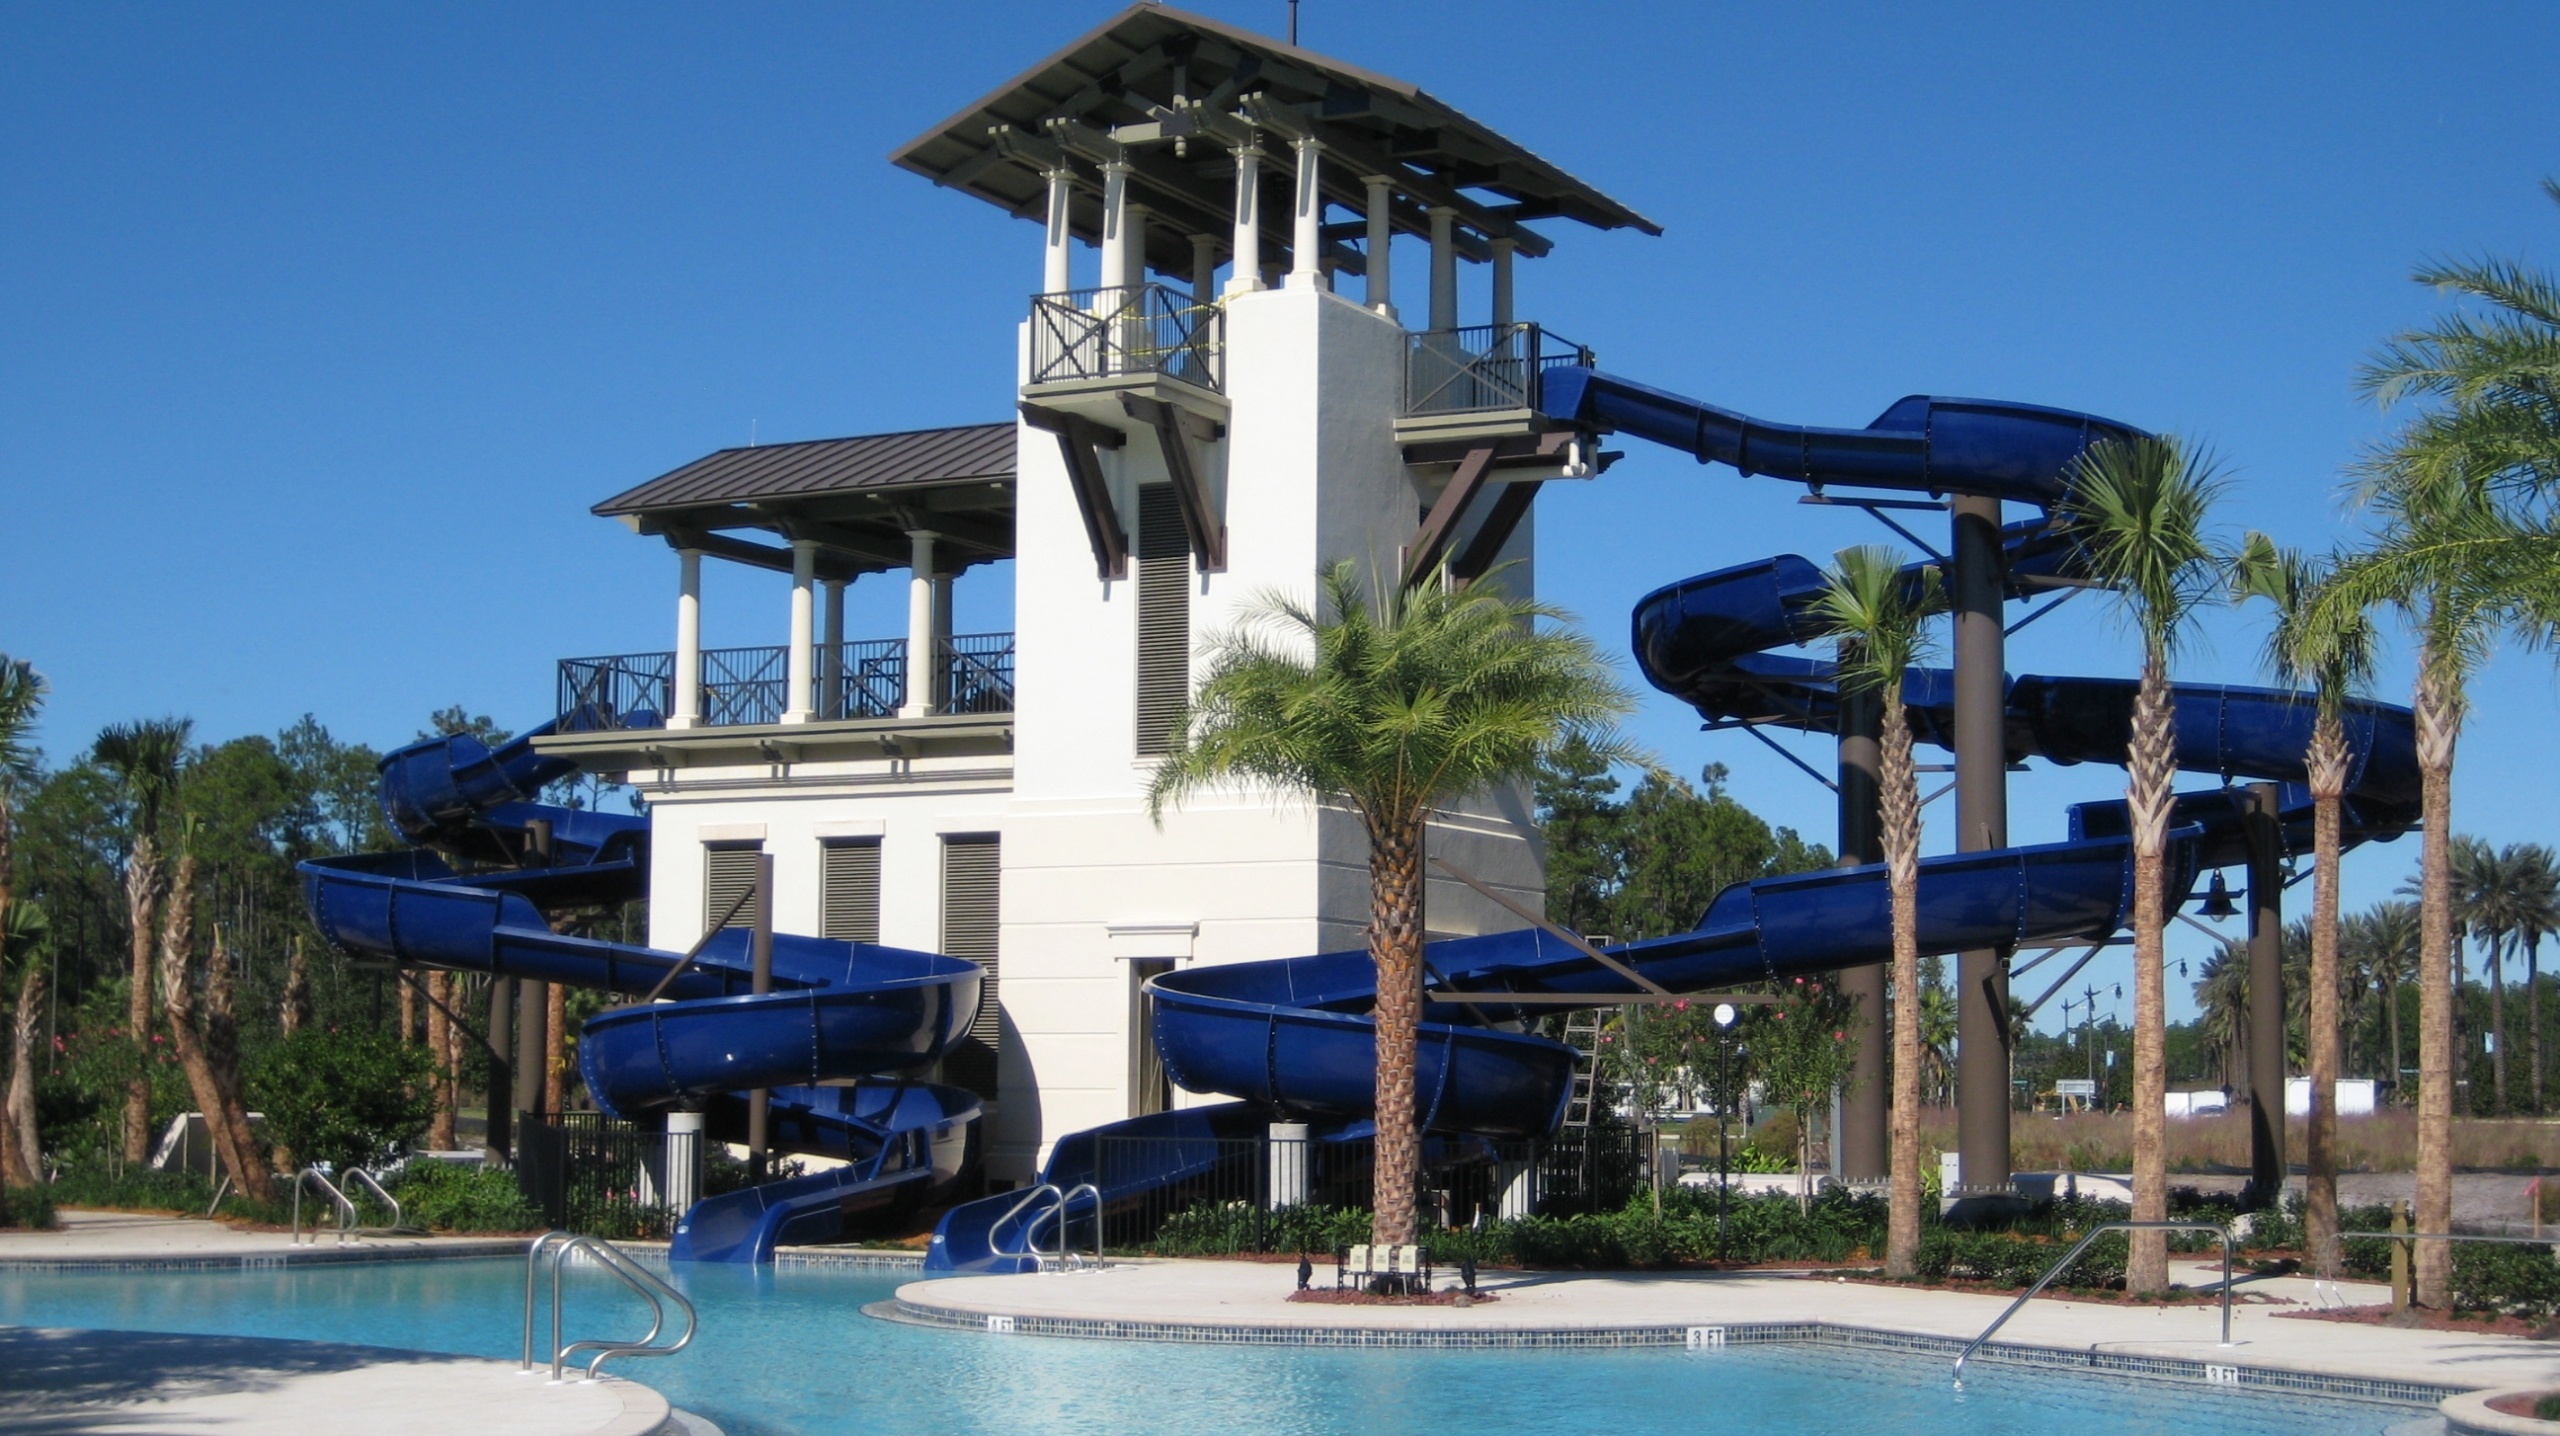 Pool Sider, Nocatee Community Park, FL, USA